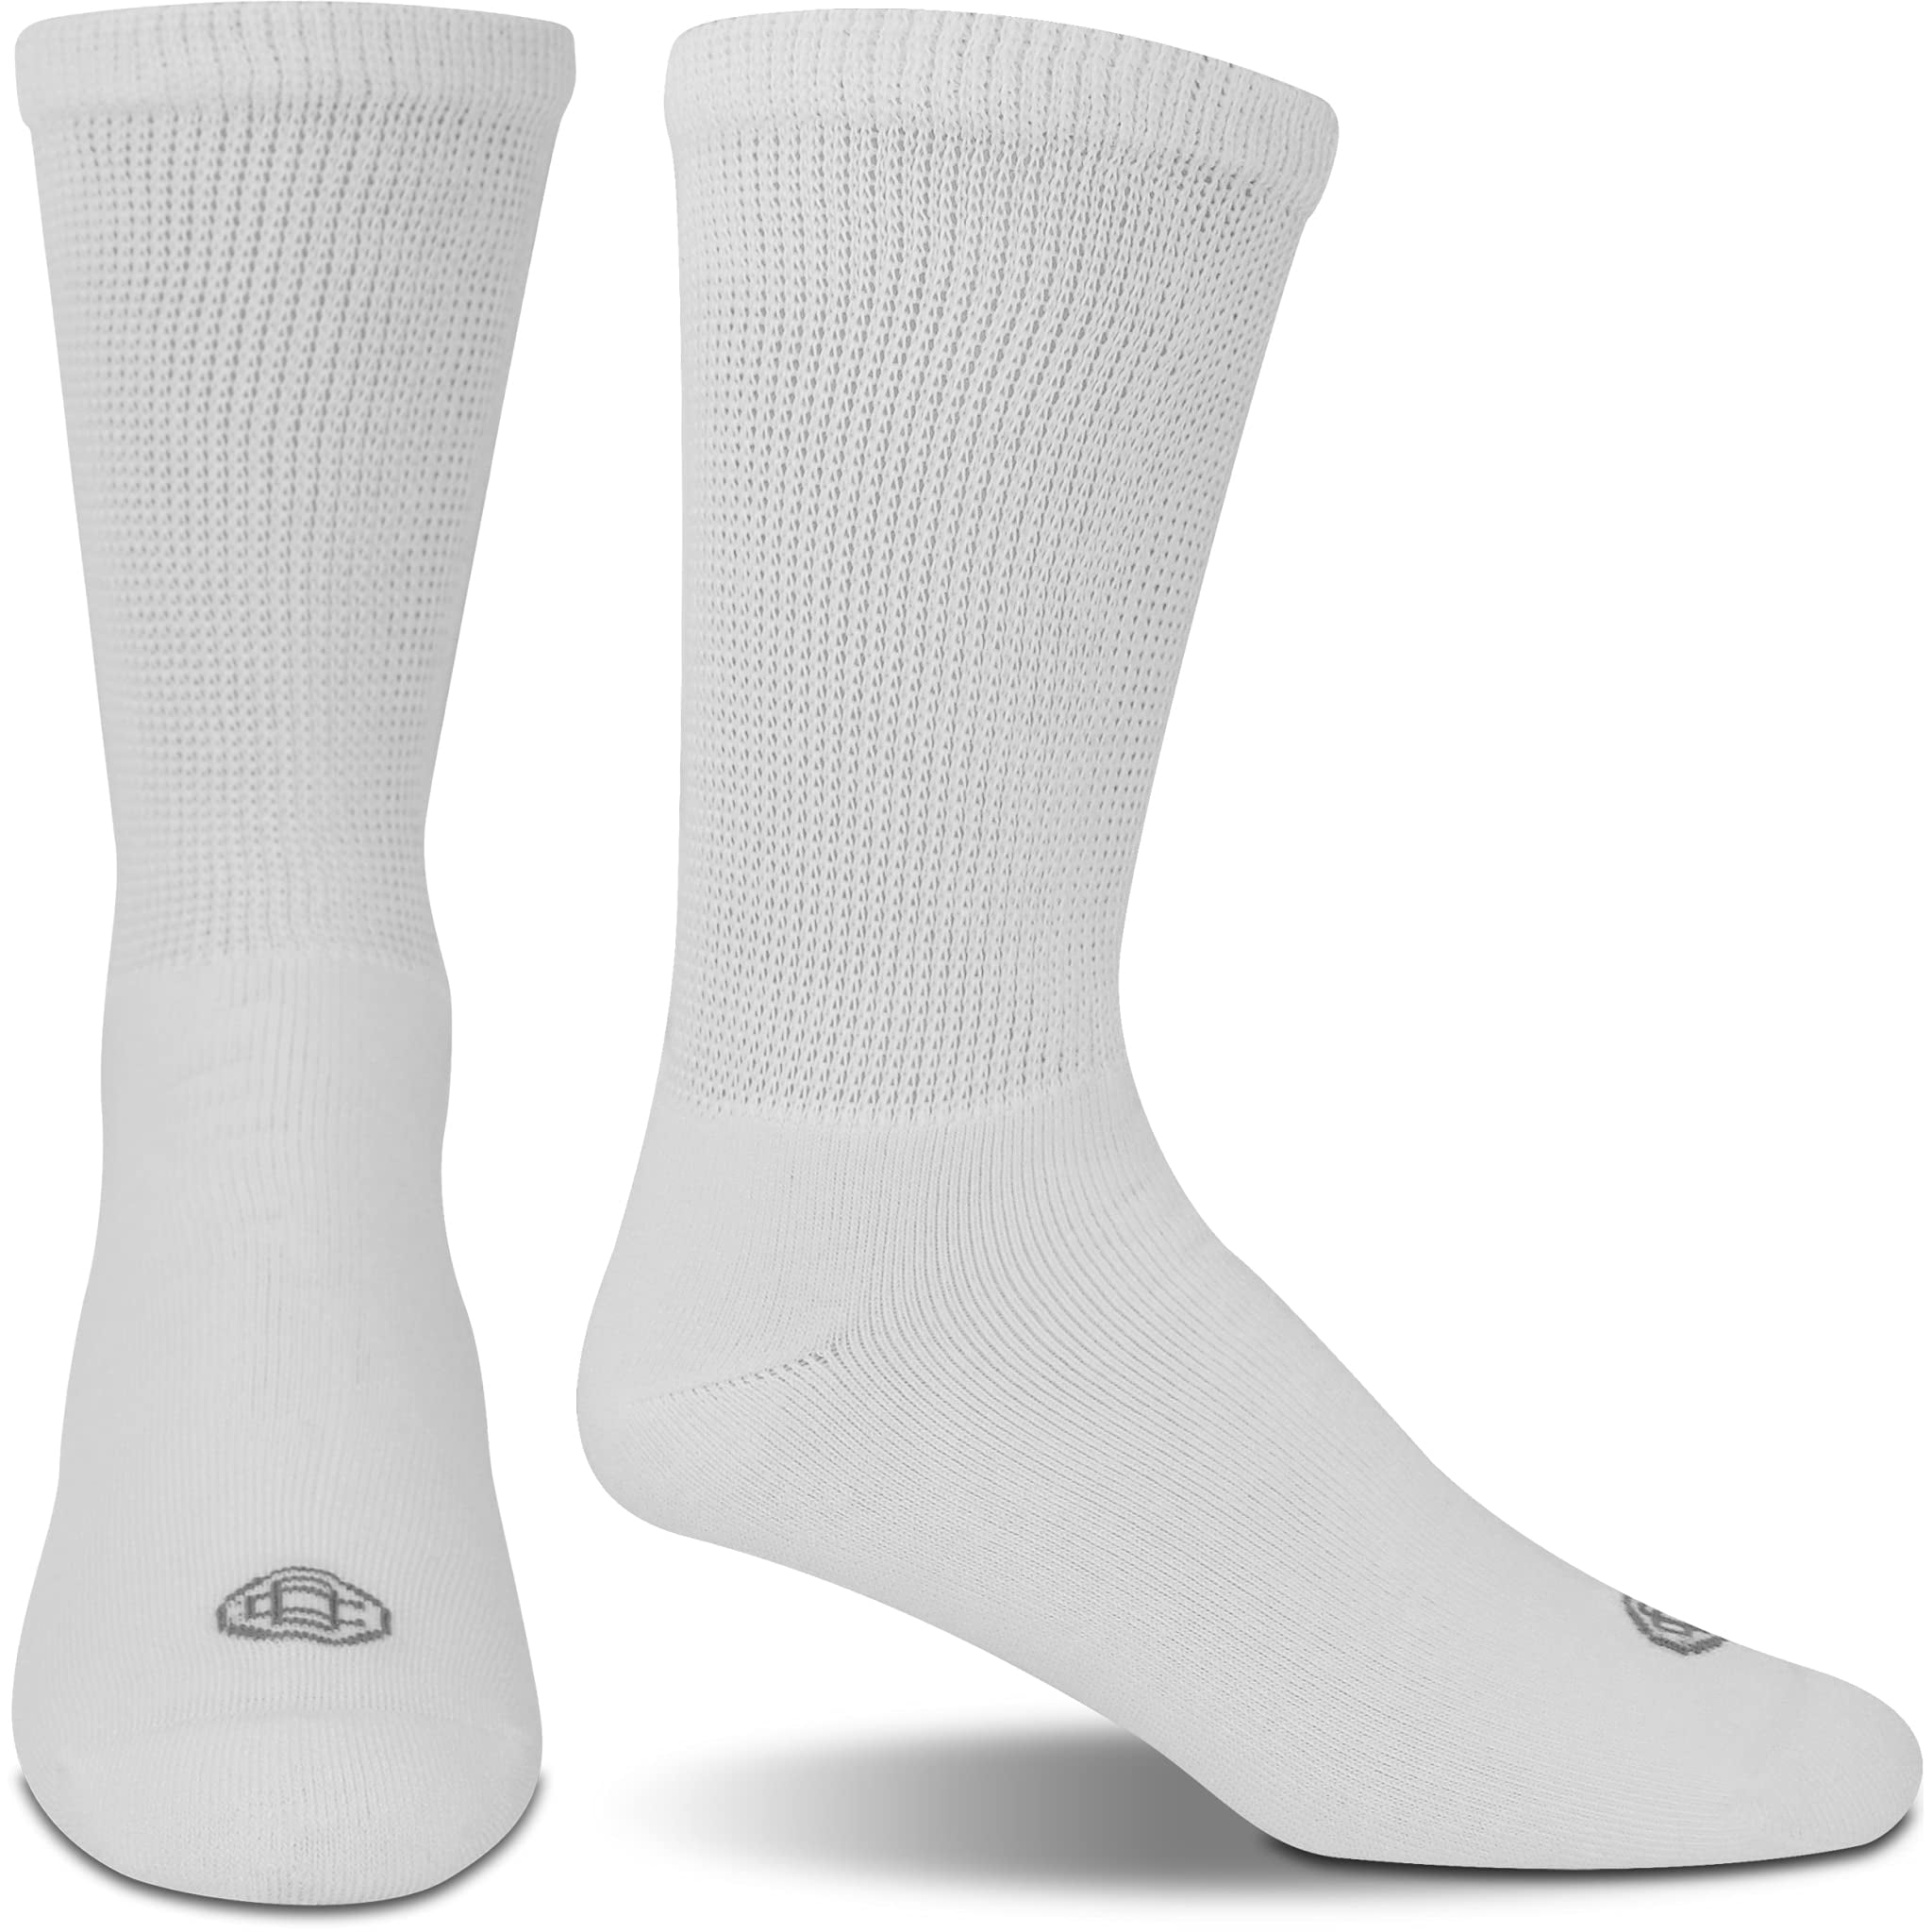 Physicians Choice 6-pr white crew 13-15 BIG MEN'S-Diabetic Cushioned socks 